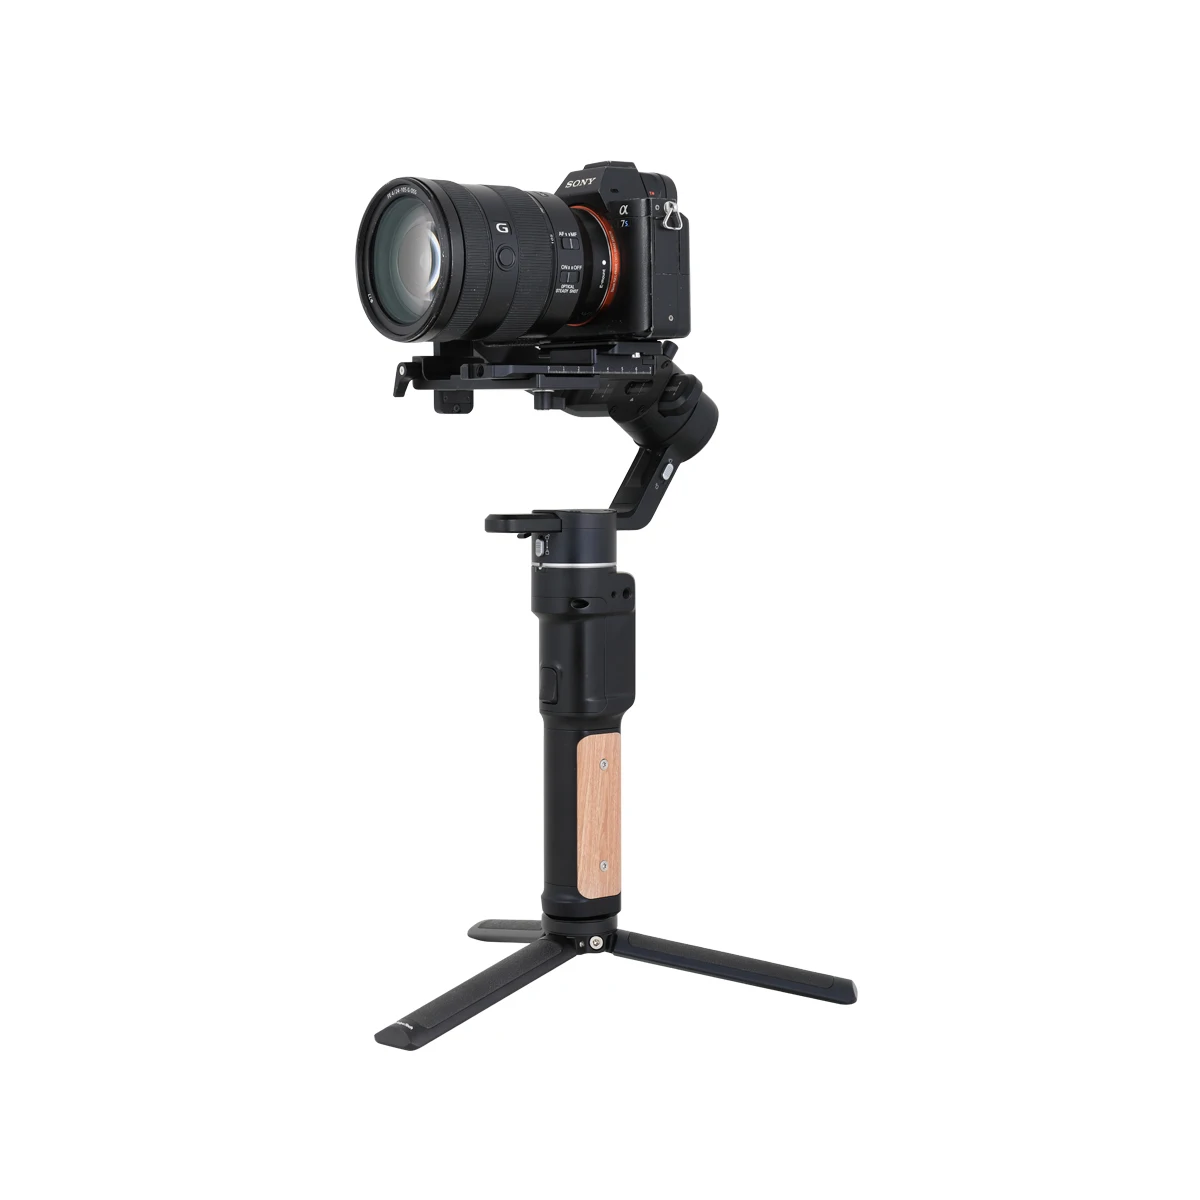 

FeiyuTech Feiyu AK2000C 3-Axis Handheld gimbal stabilizer for DSLR Mirrorless Camera Canon Nikon Sony Fujifilm playload 2.2KGS